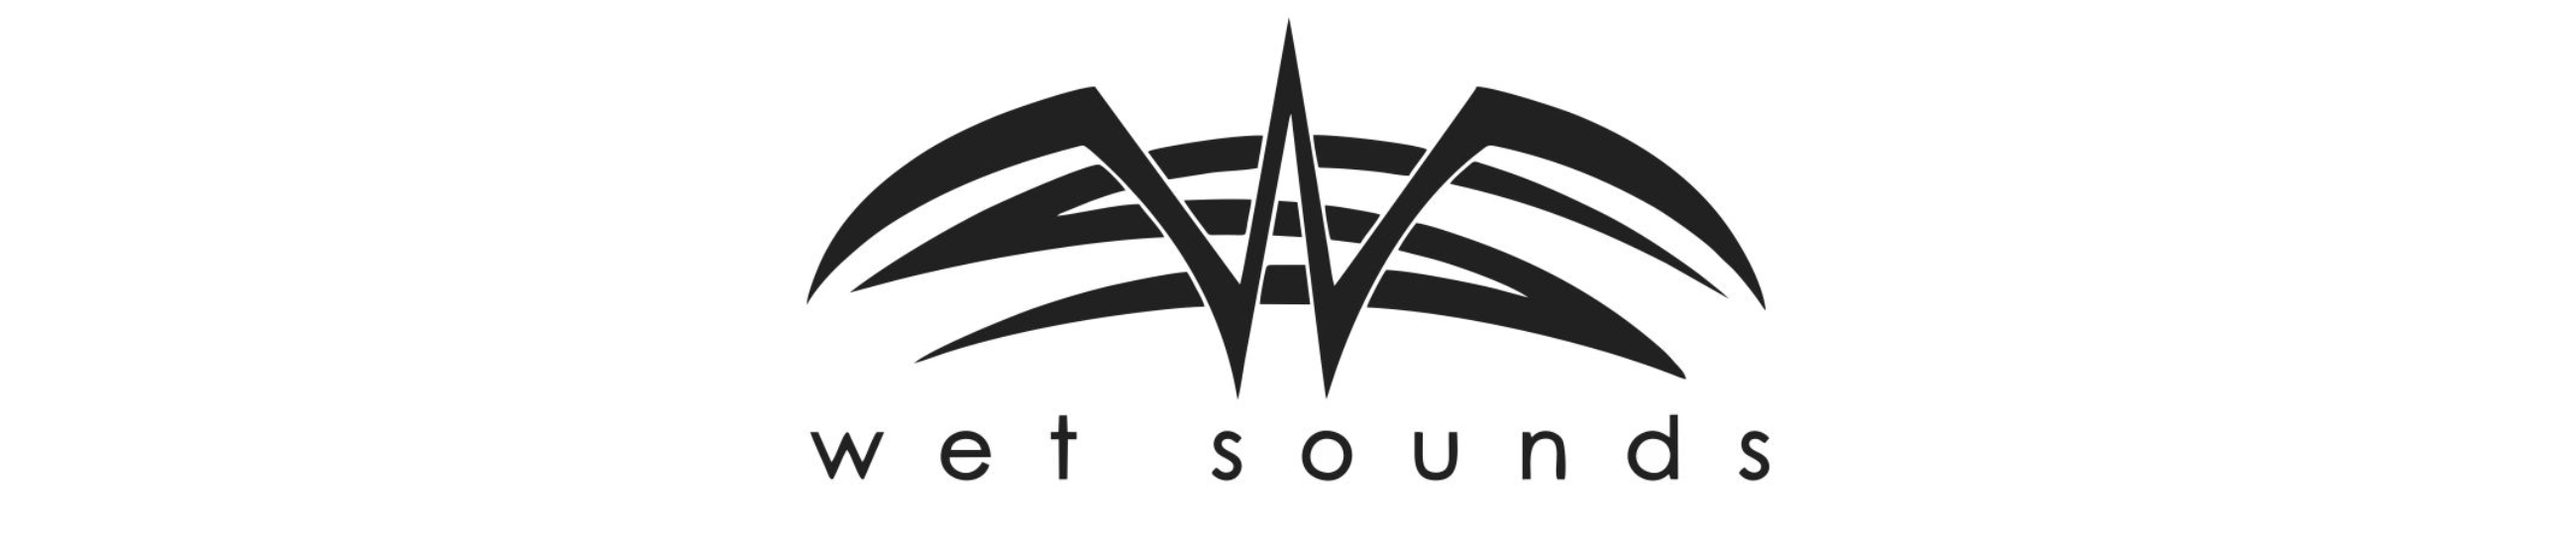 wet sounds logo